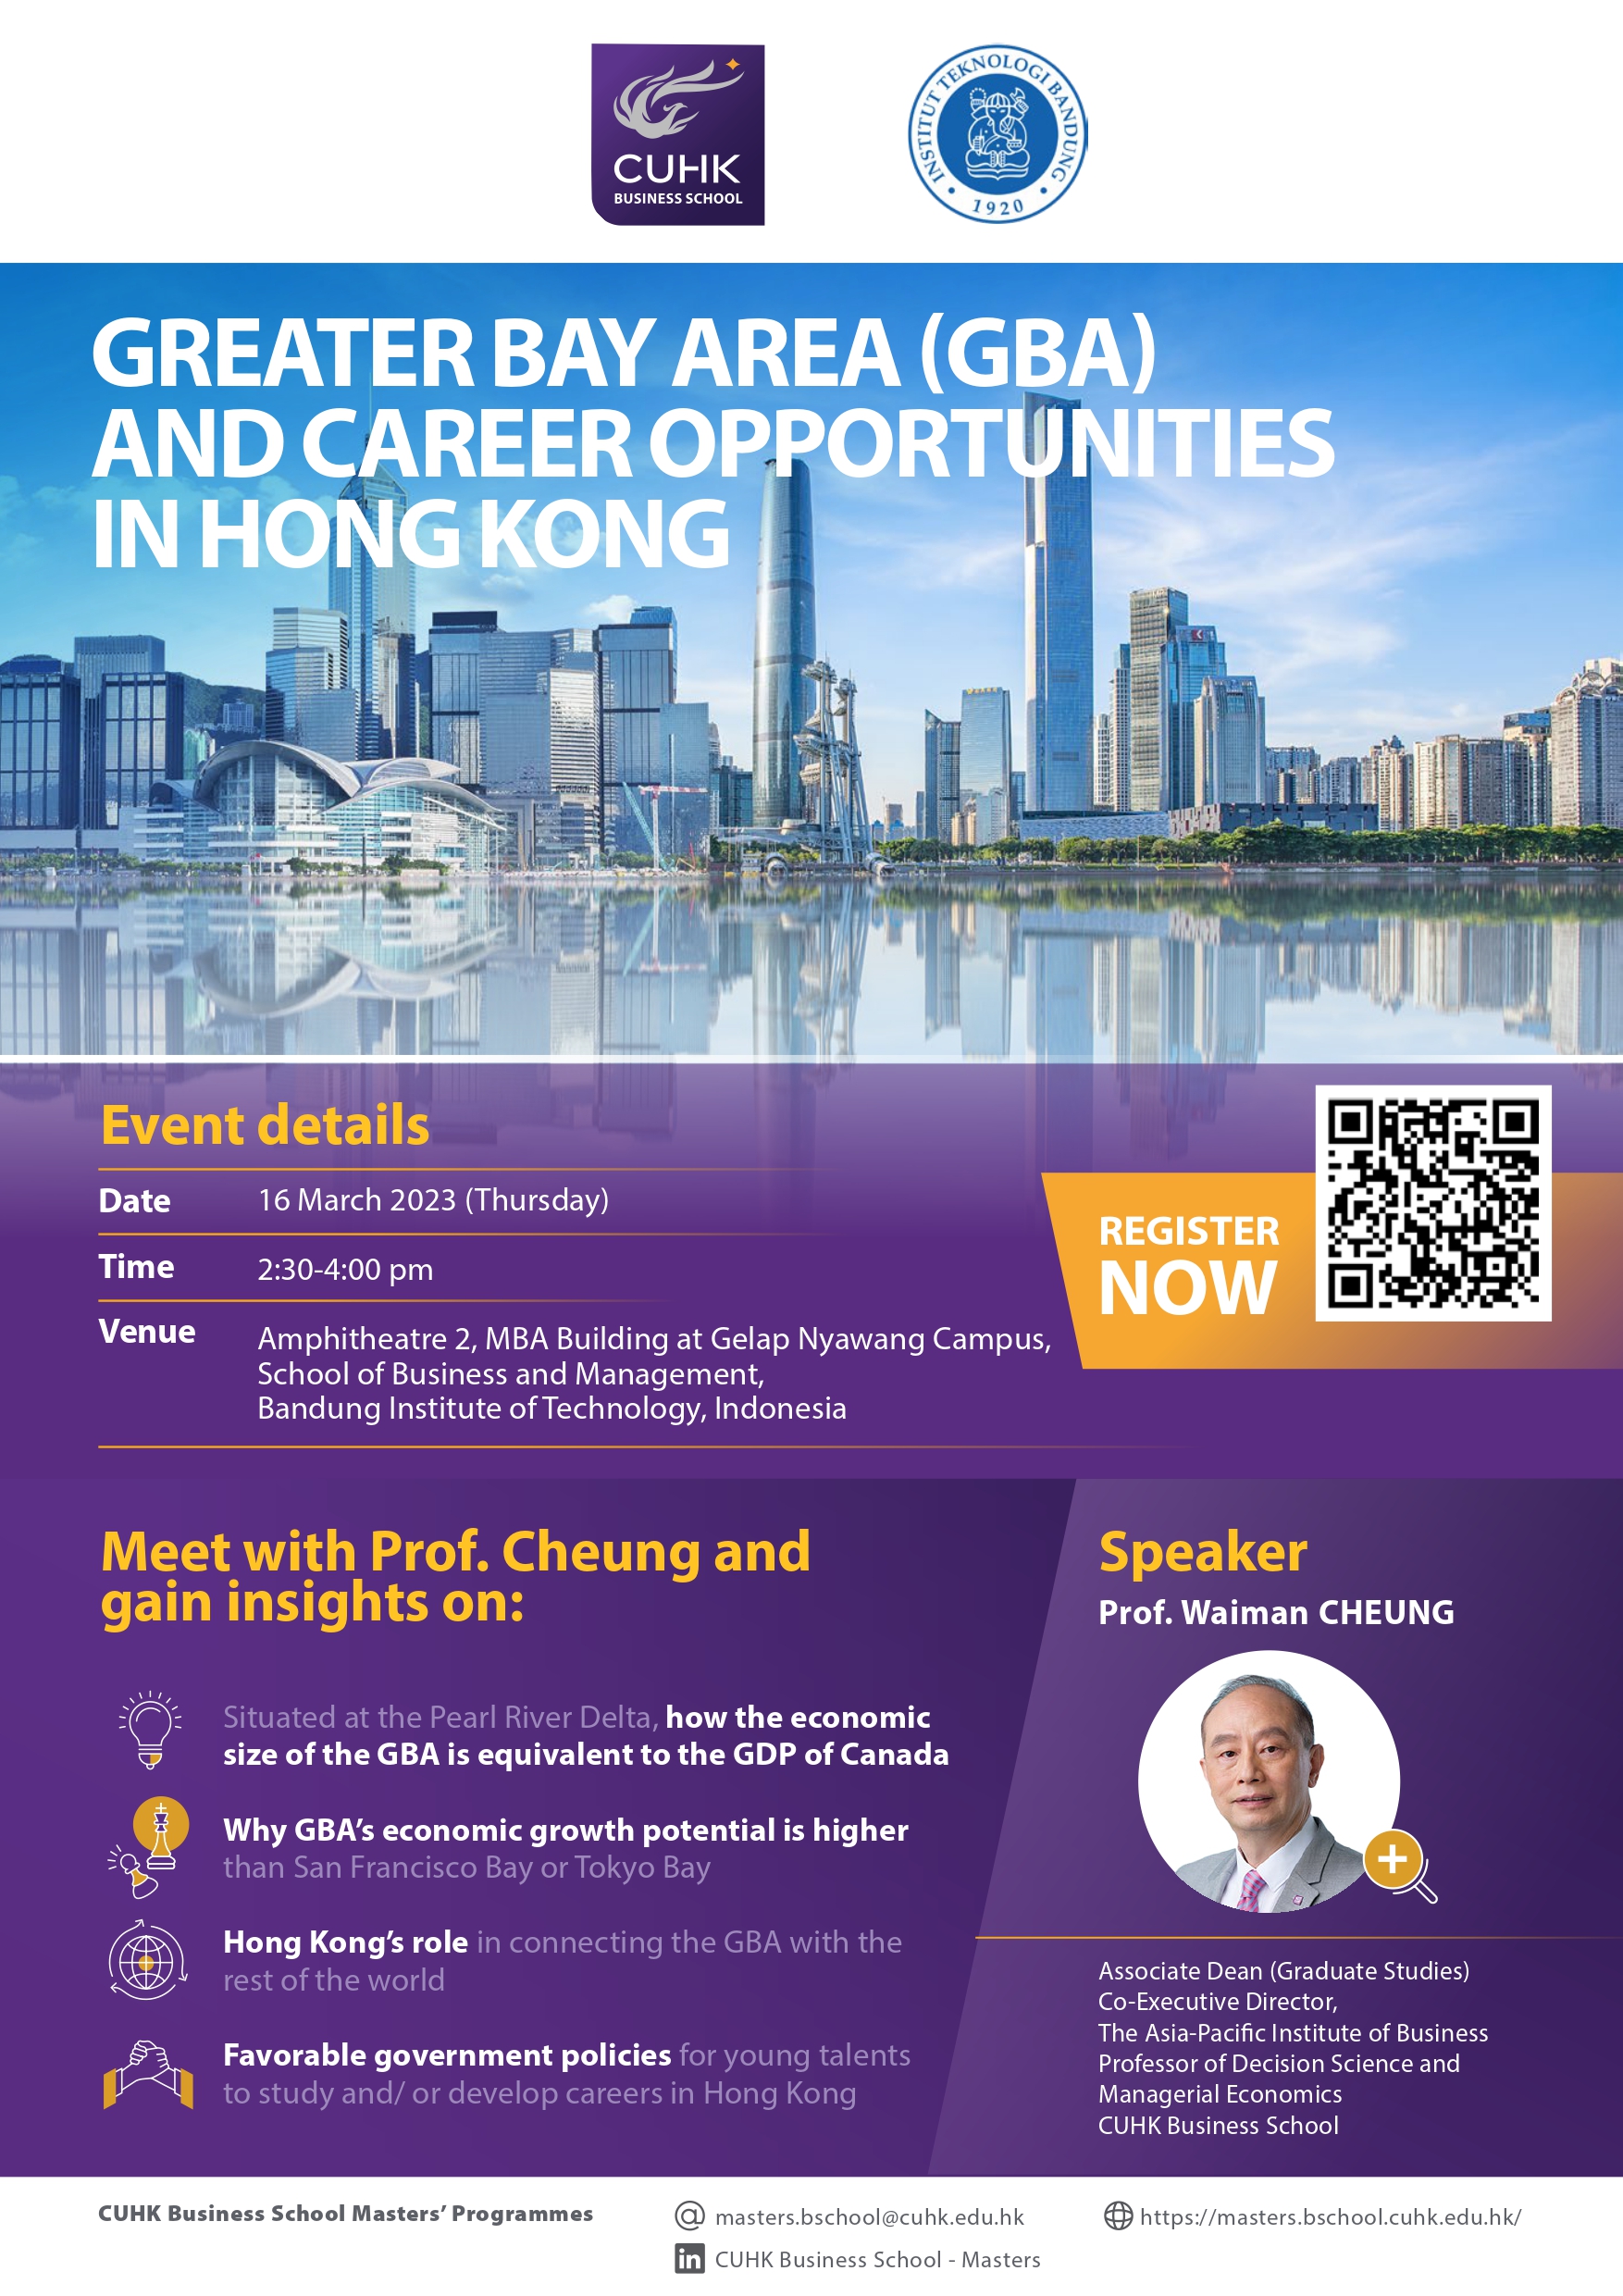 The Chinese University of Hong Kong (CUHK) Business School TALK